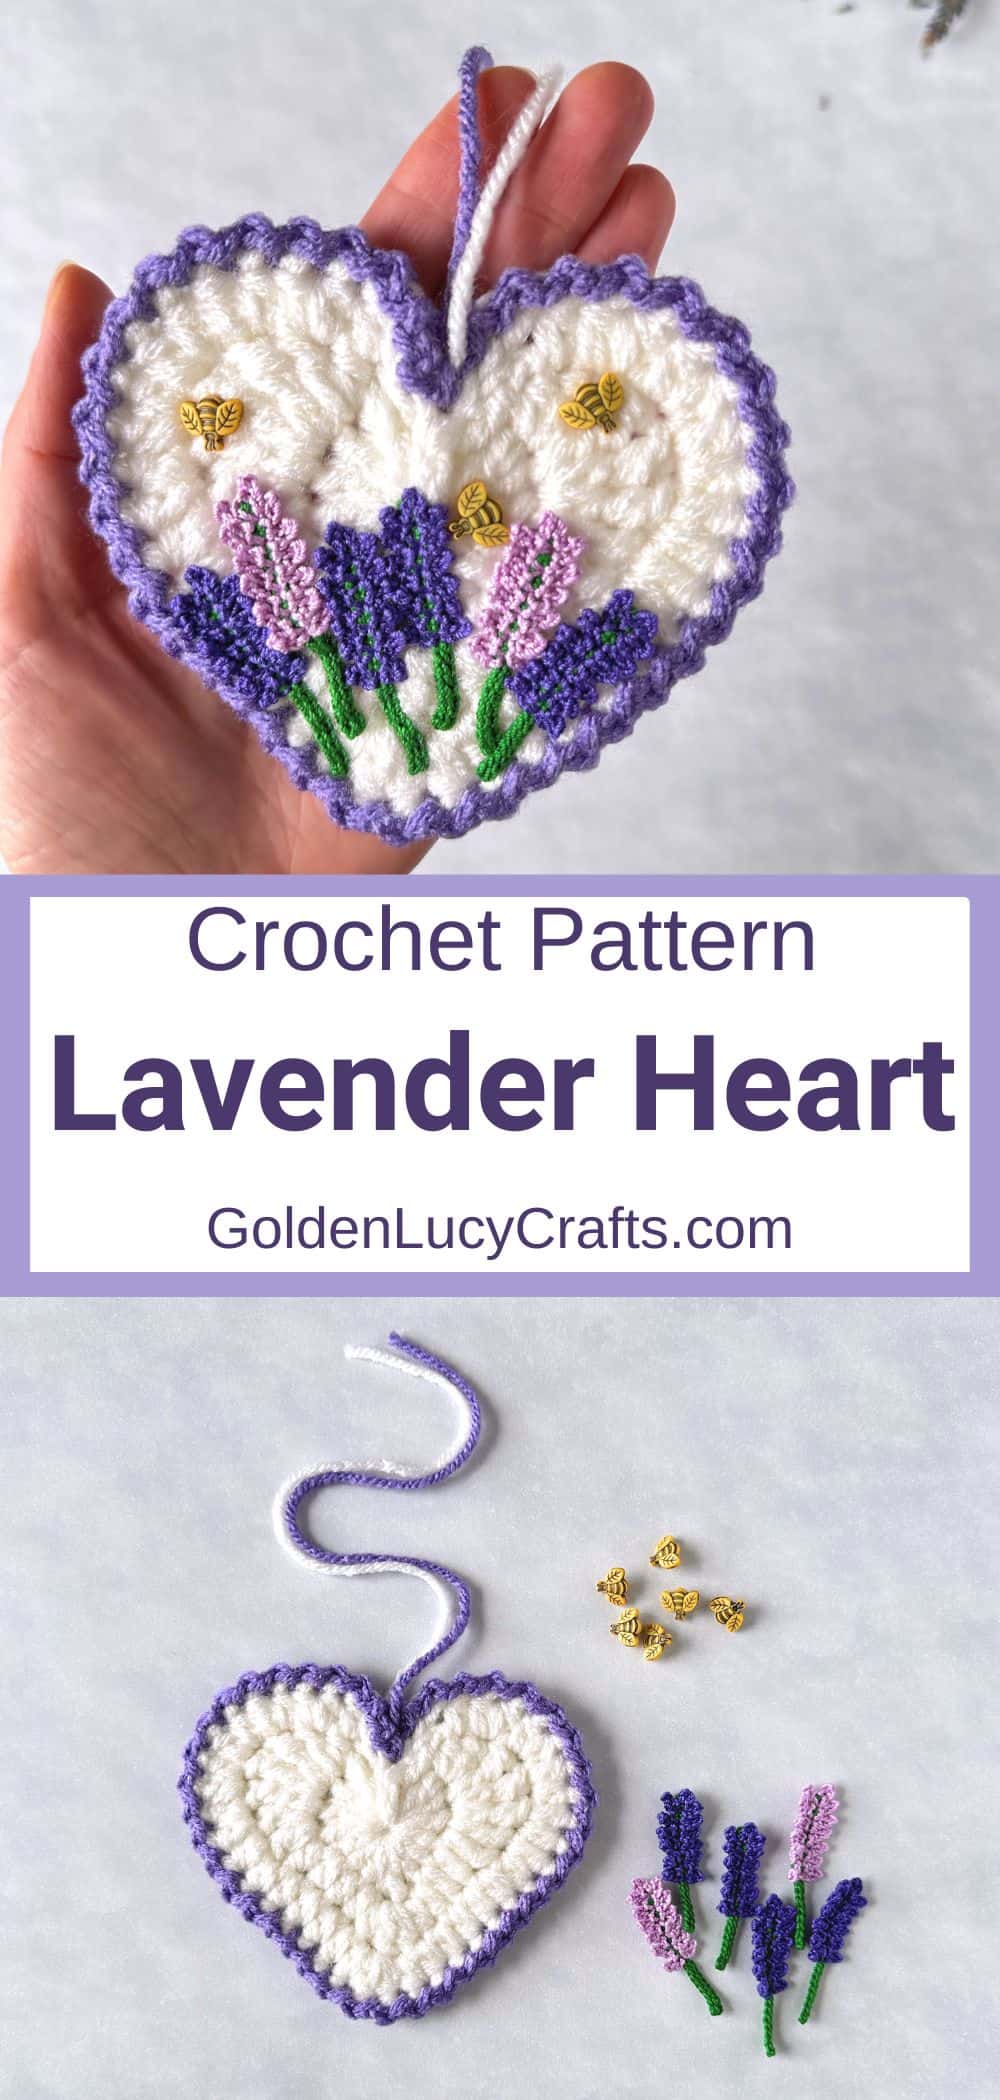 Crocheted lavender heart ornament.